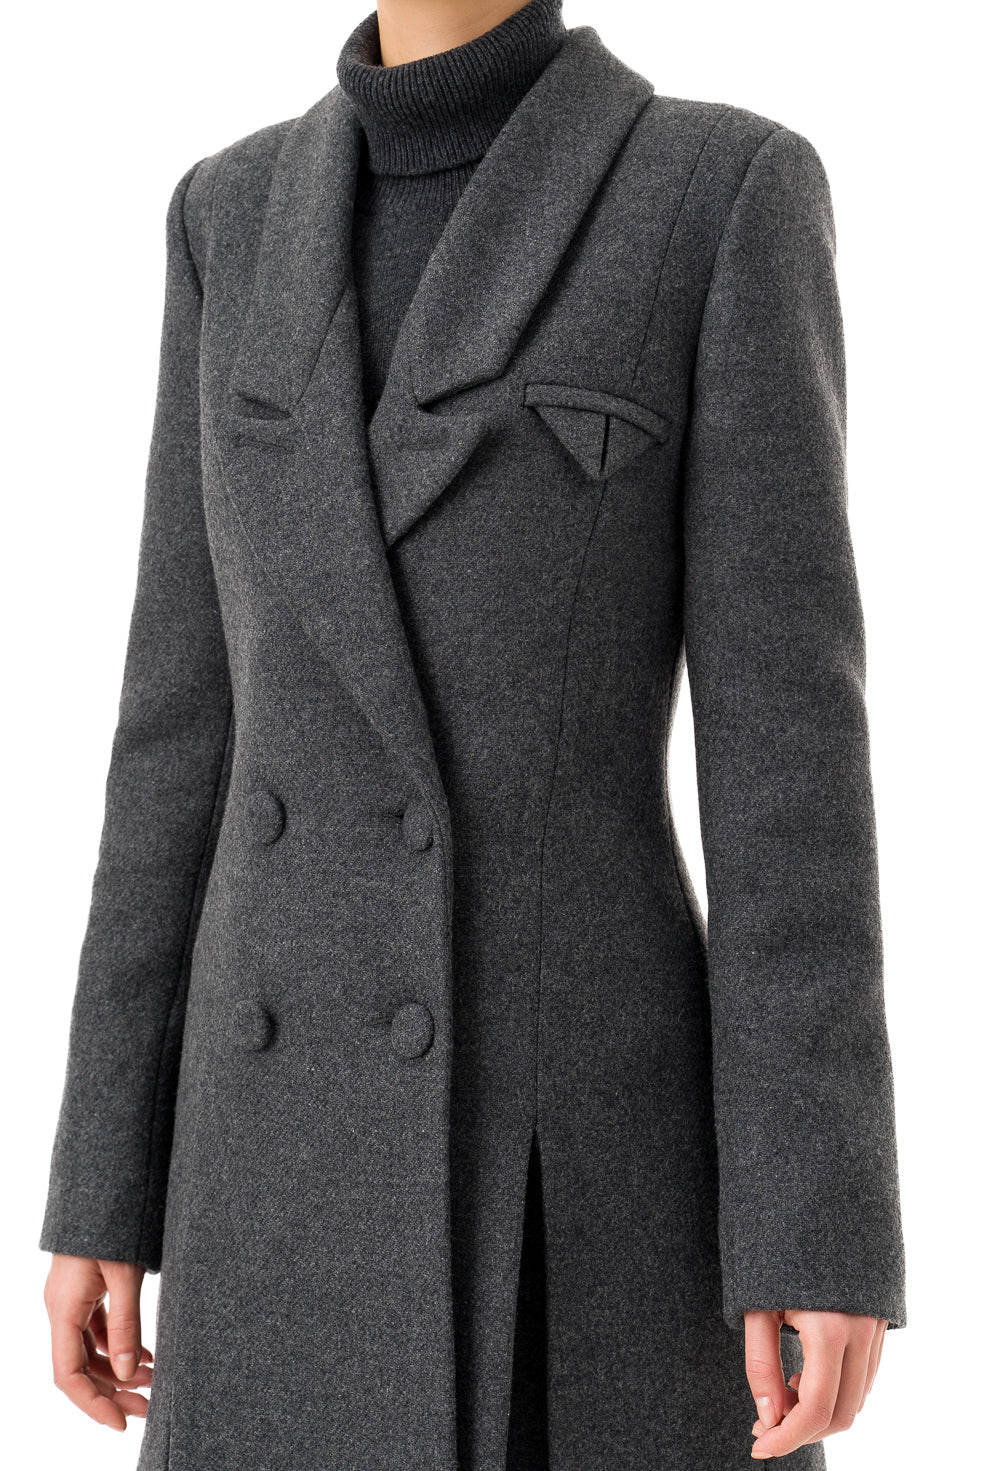 'Amelia' Double-Breasted Grey Coat